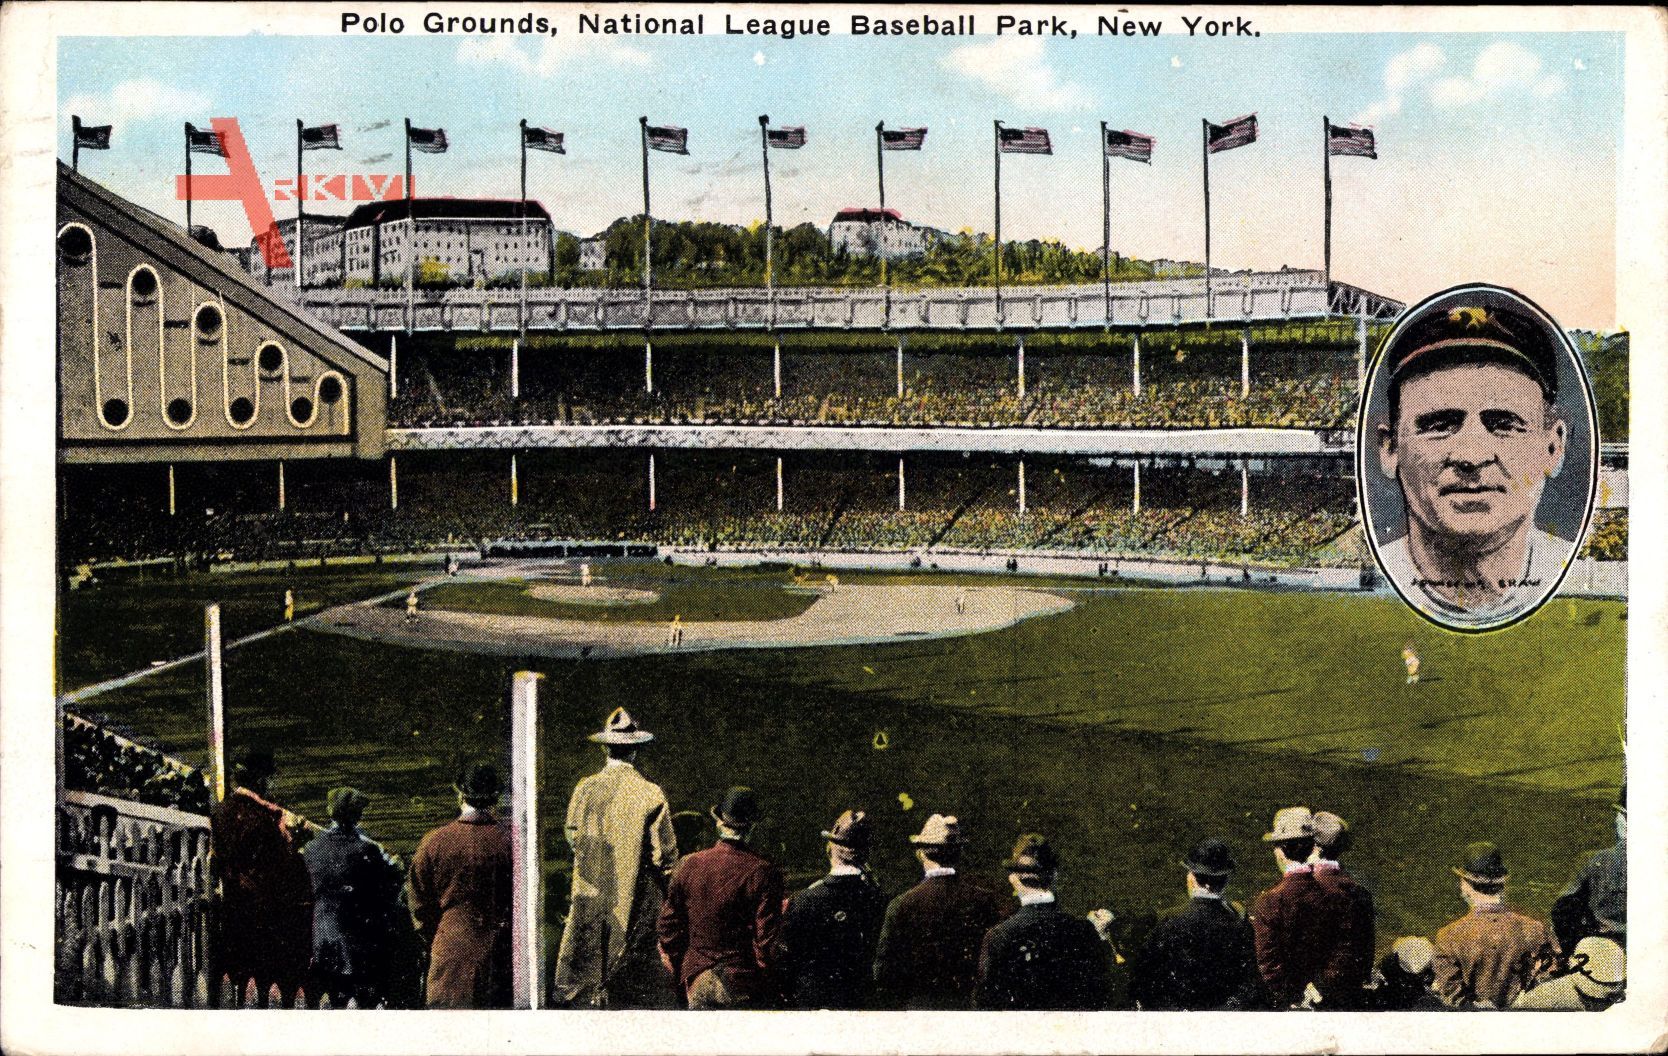 New York City USA, Polo Grounds, National League Baseball Park, Giants